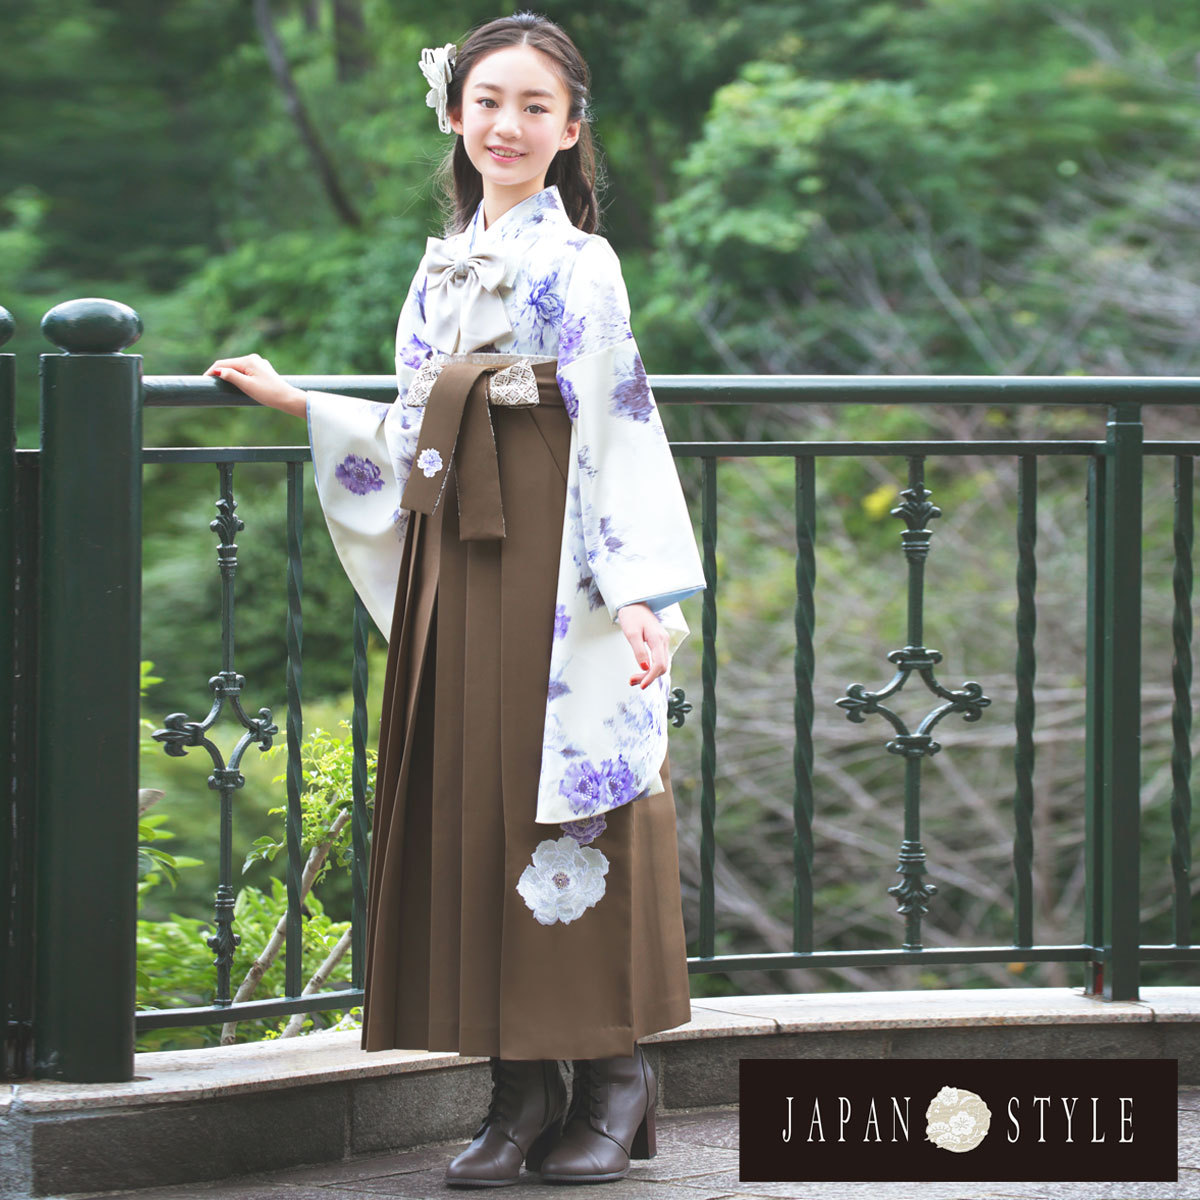 JAPAN STYLE 貸衣装 ジュニア 二尺袖 着物 袴 リボン 薄クリーム 